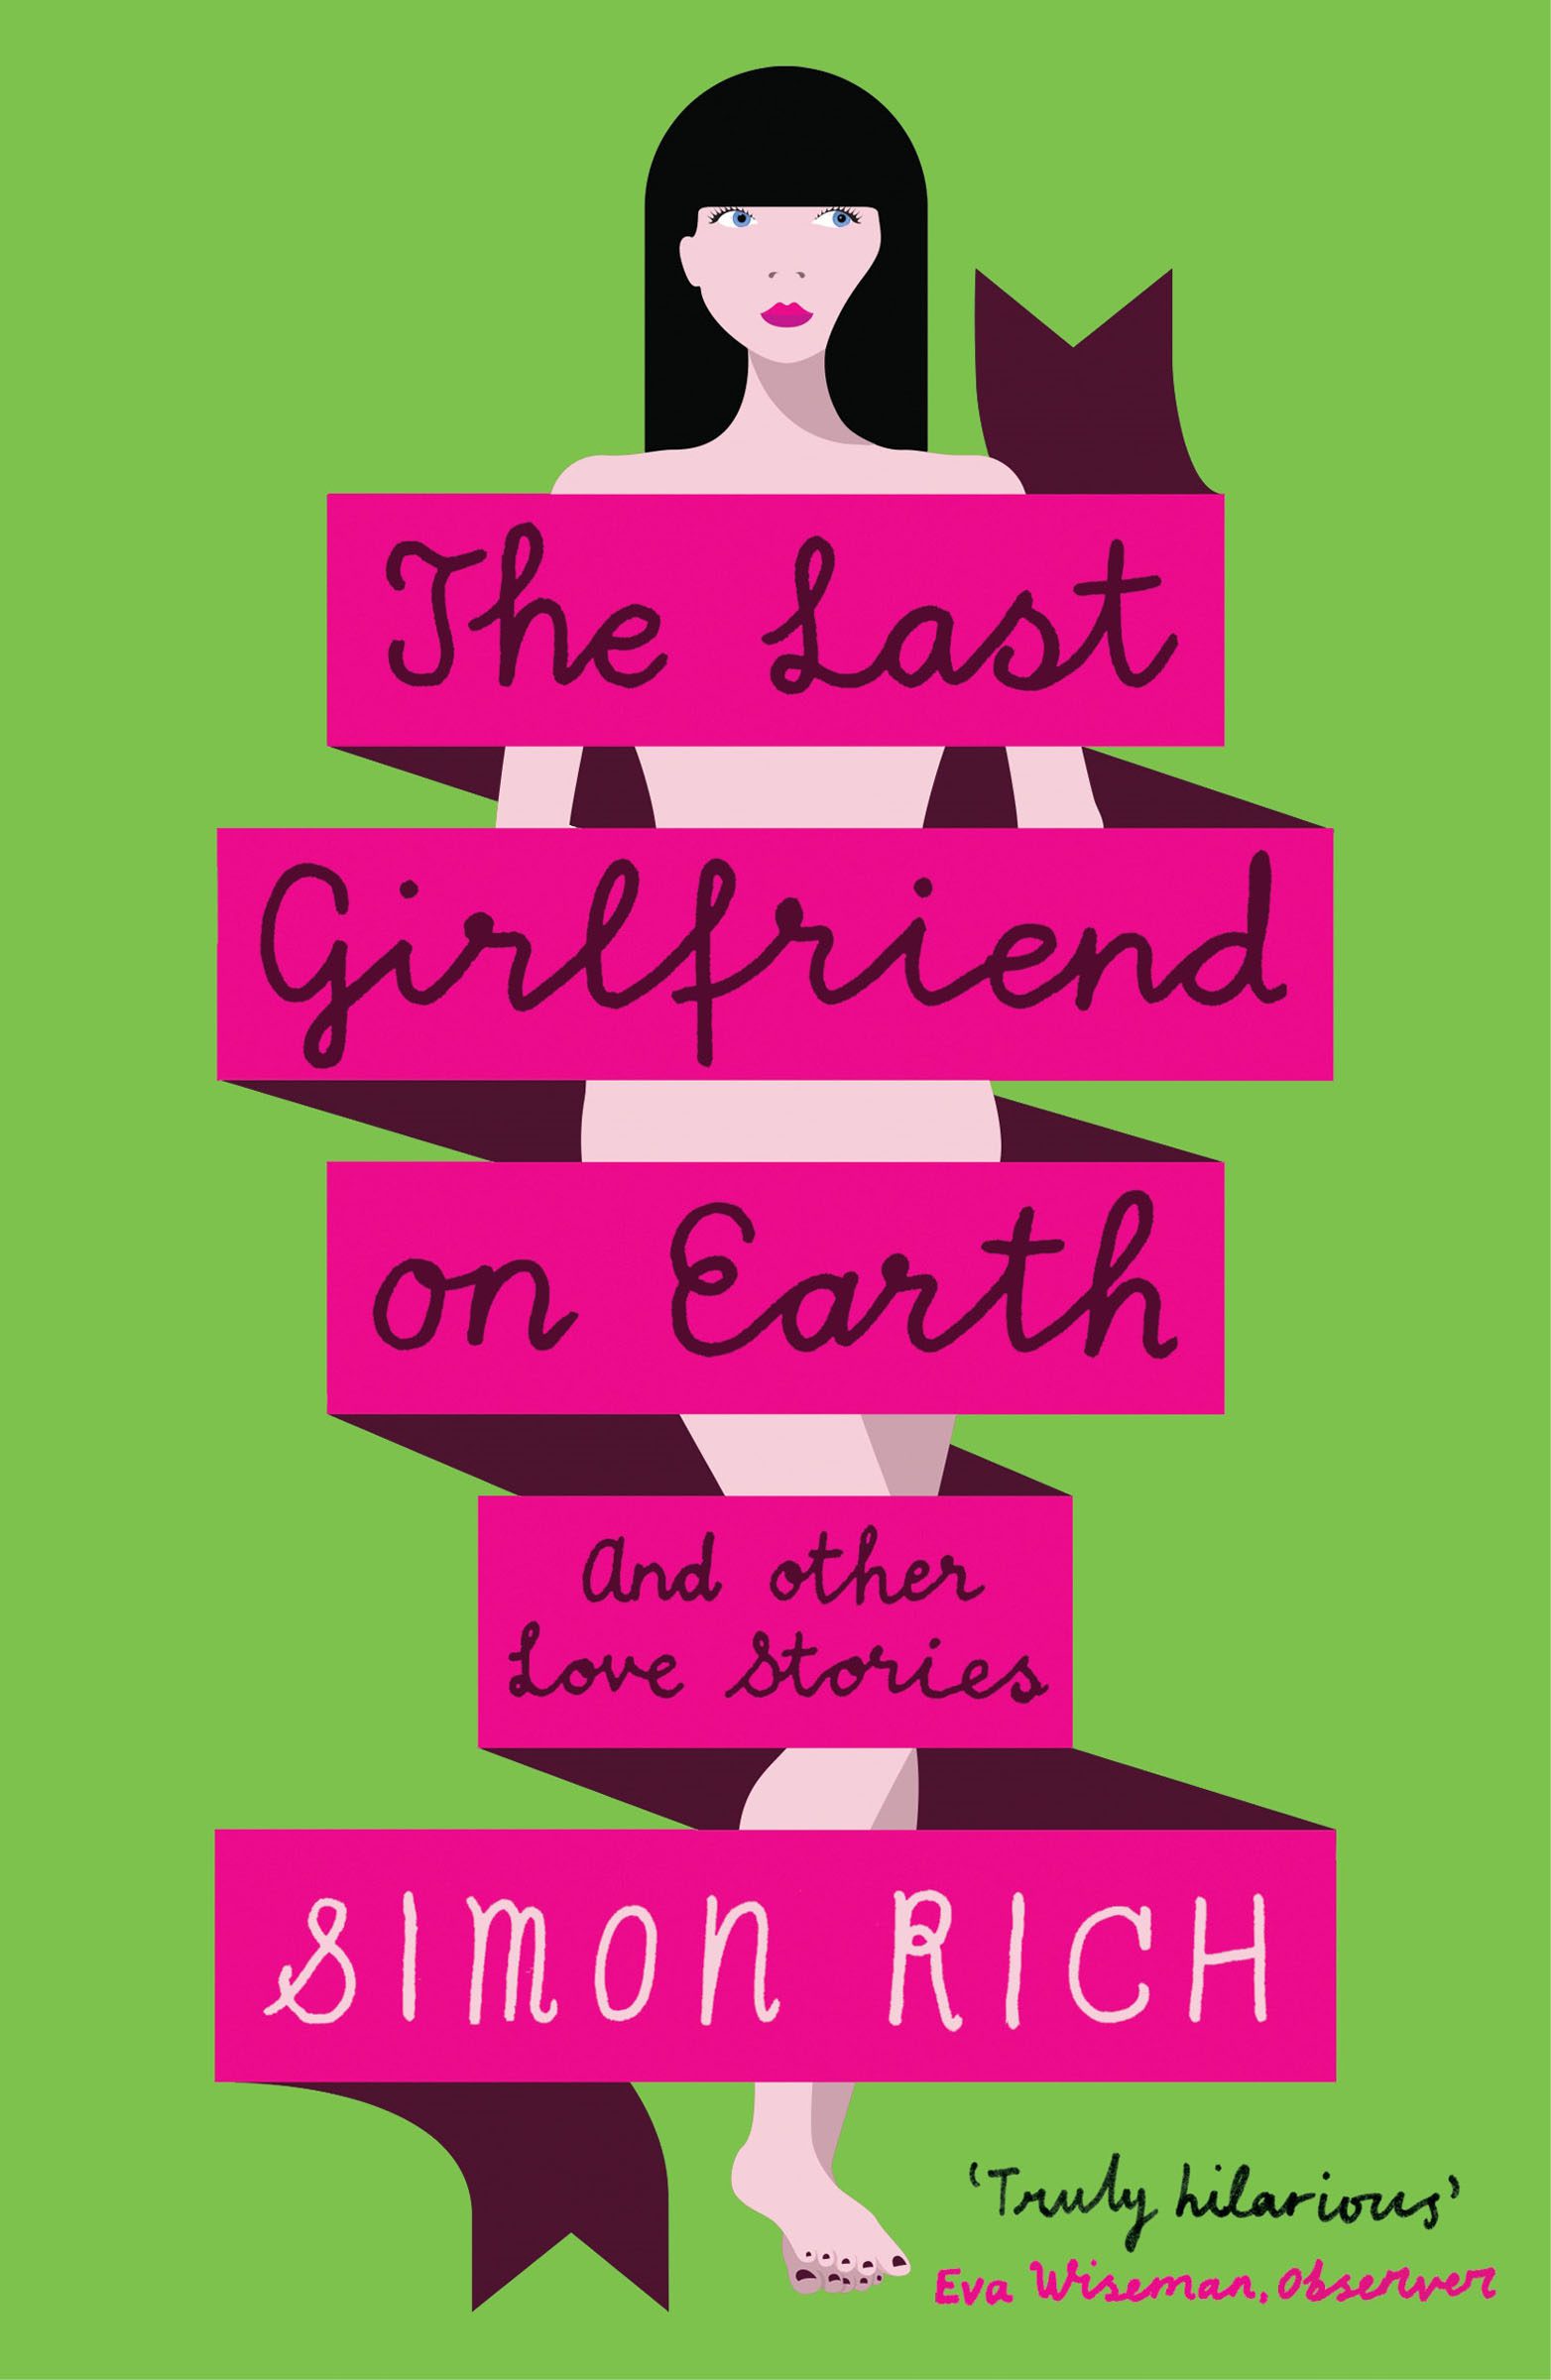 The Last Girlfriend on Earth